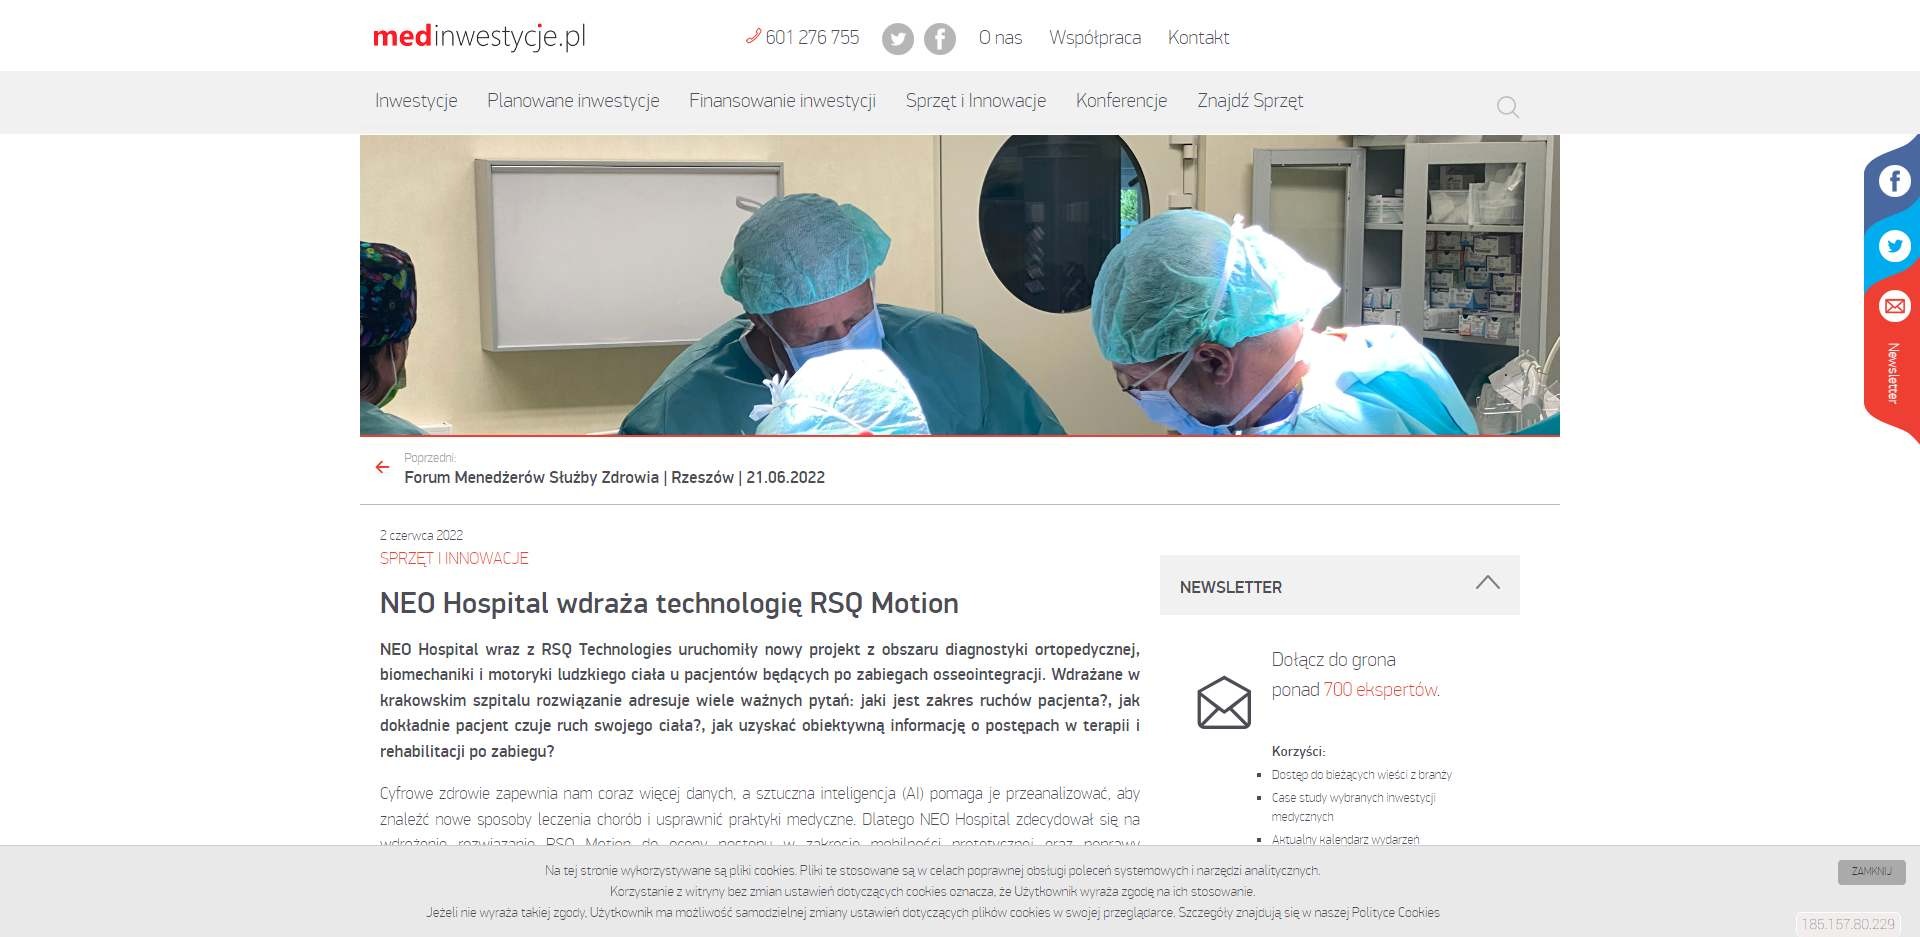 neo hospital wdraza technologie rsq motion